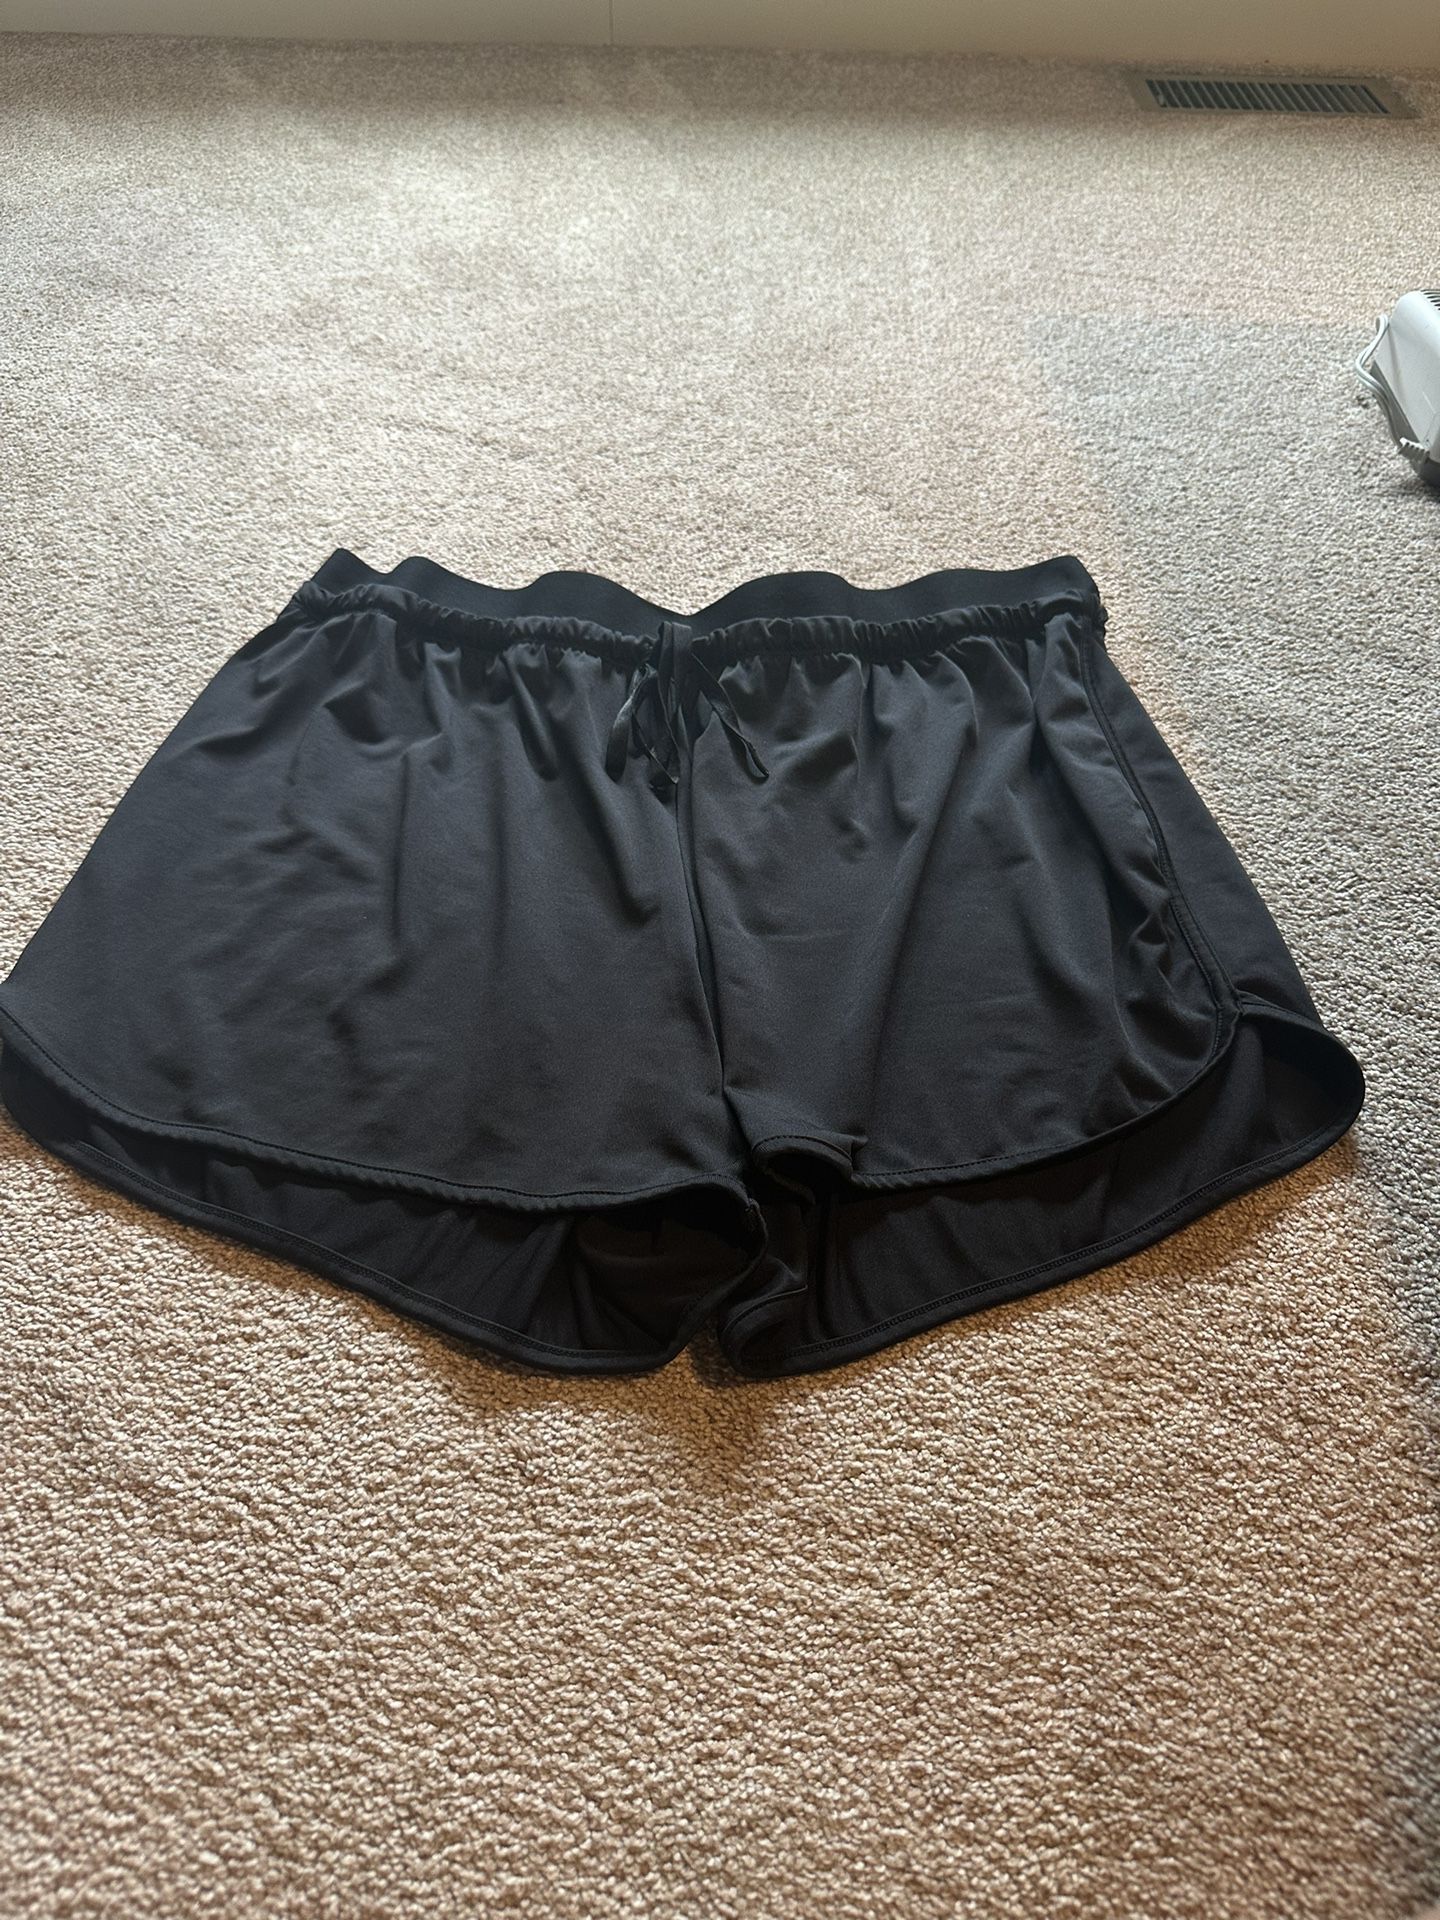 Tek Gear Drytek 1X Black Multipurpose Shorts